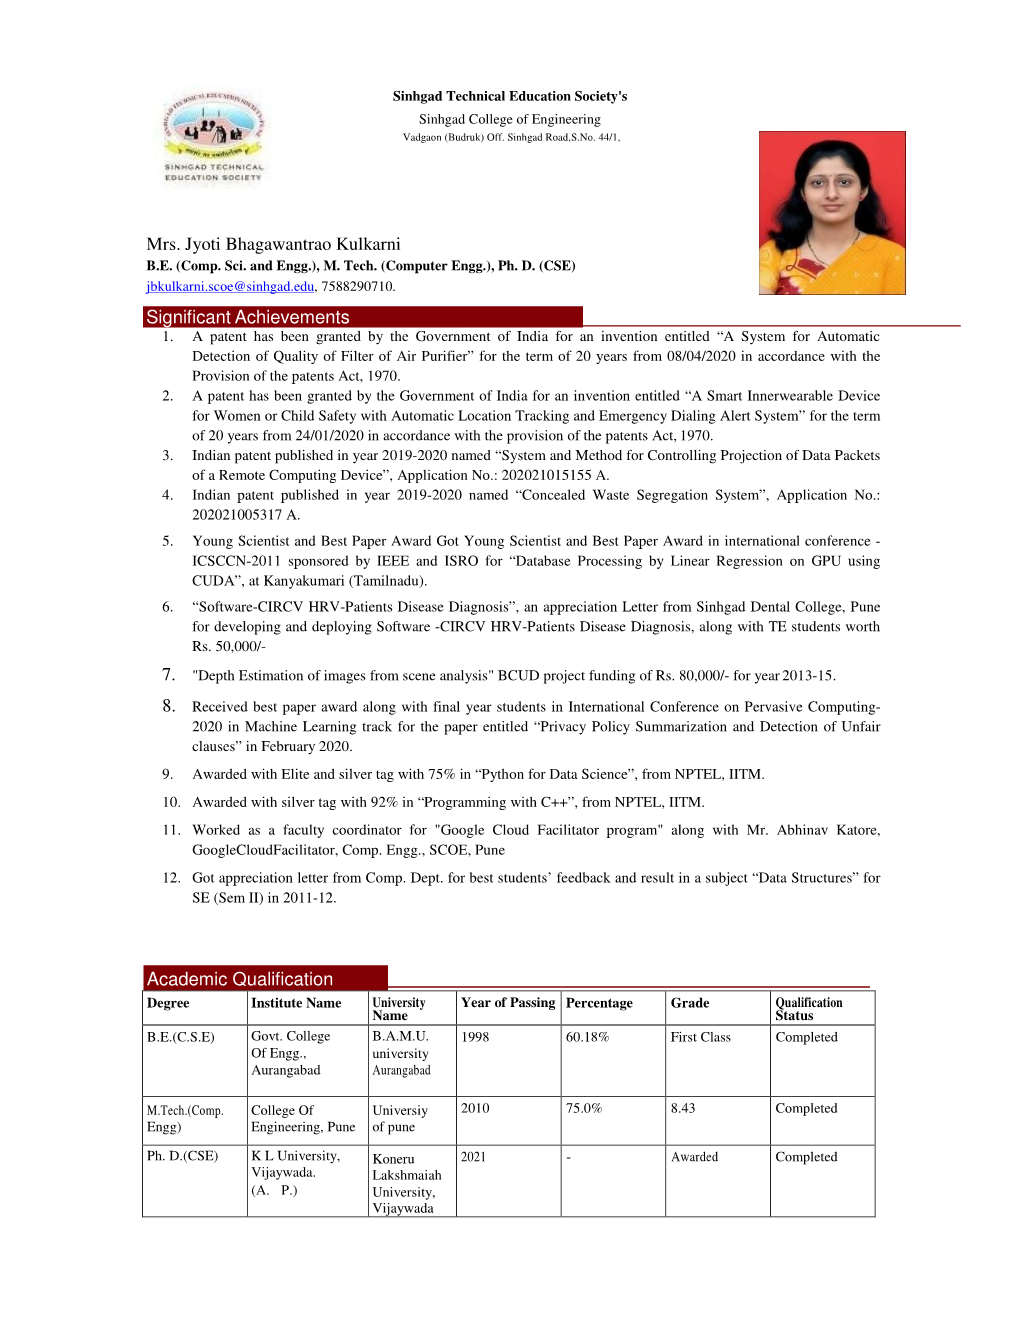 Academic Qualification Mrs. Jyoti Bhagawantrao Kulkarni Significant Achievements